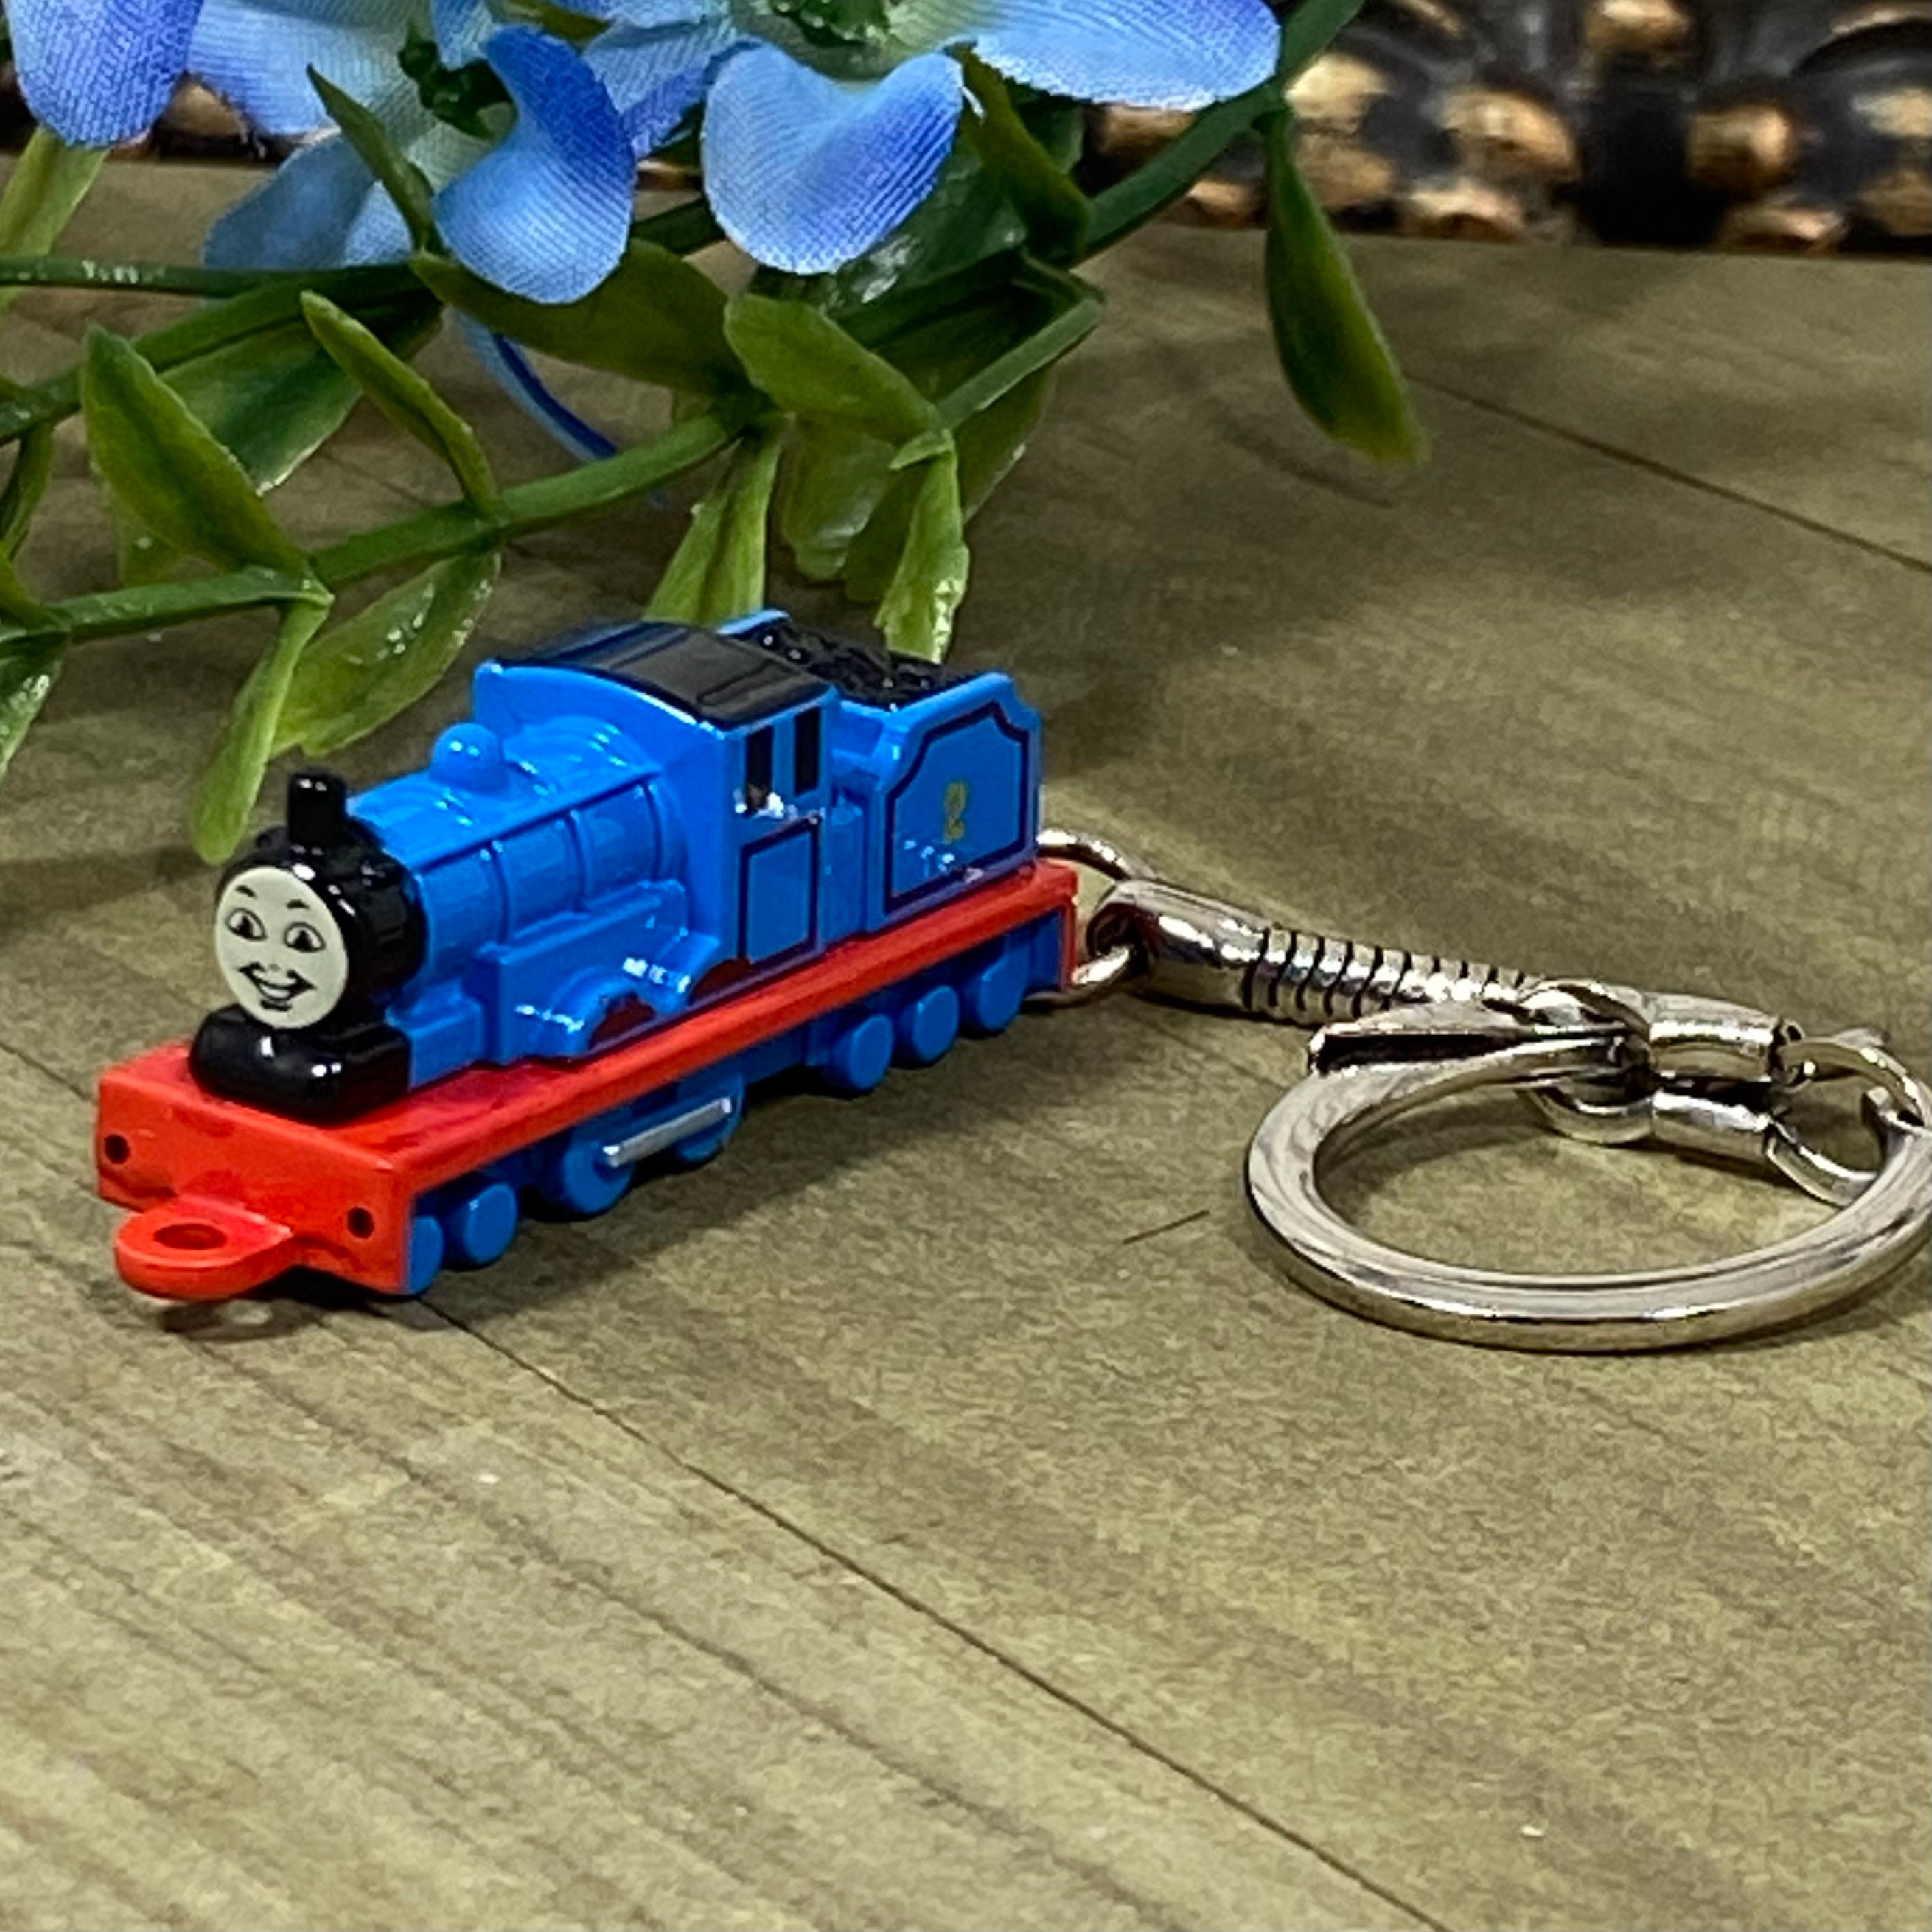 12 Thomas and Friends Engine Train Keychain for Kids Birthday